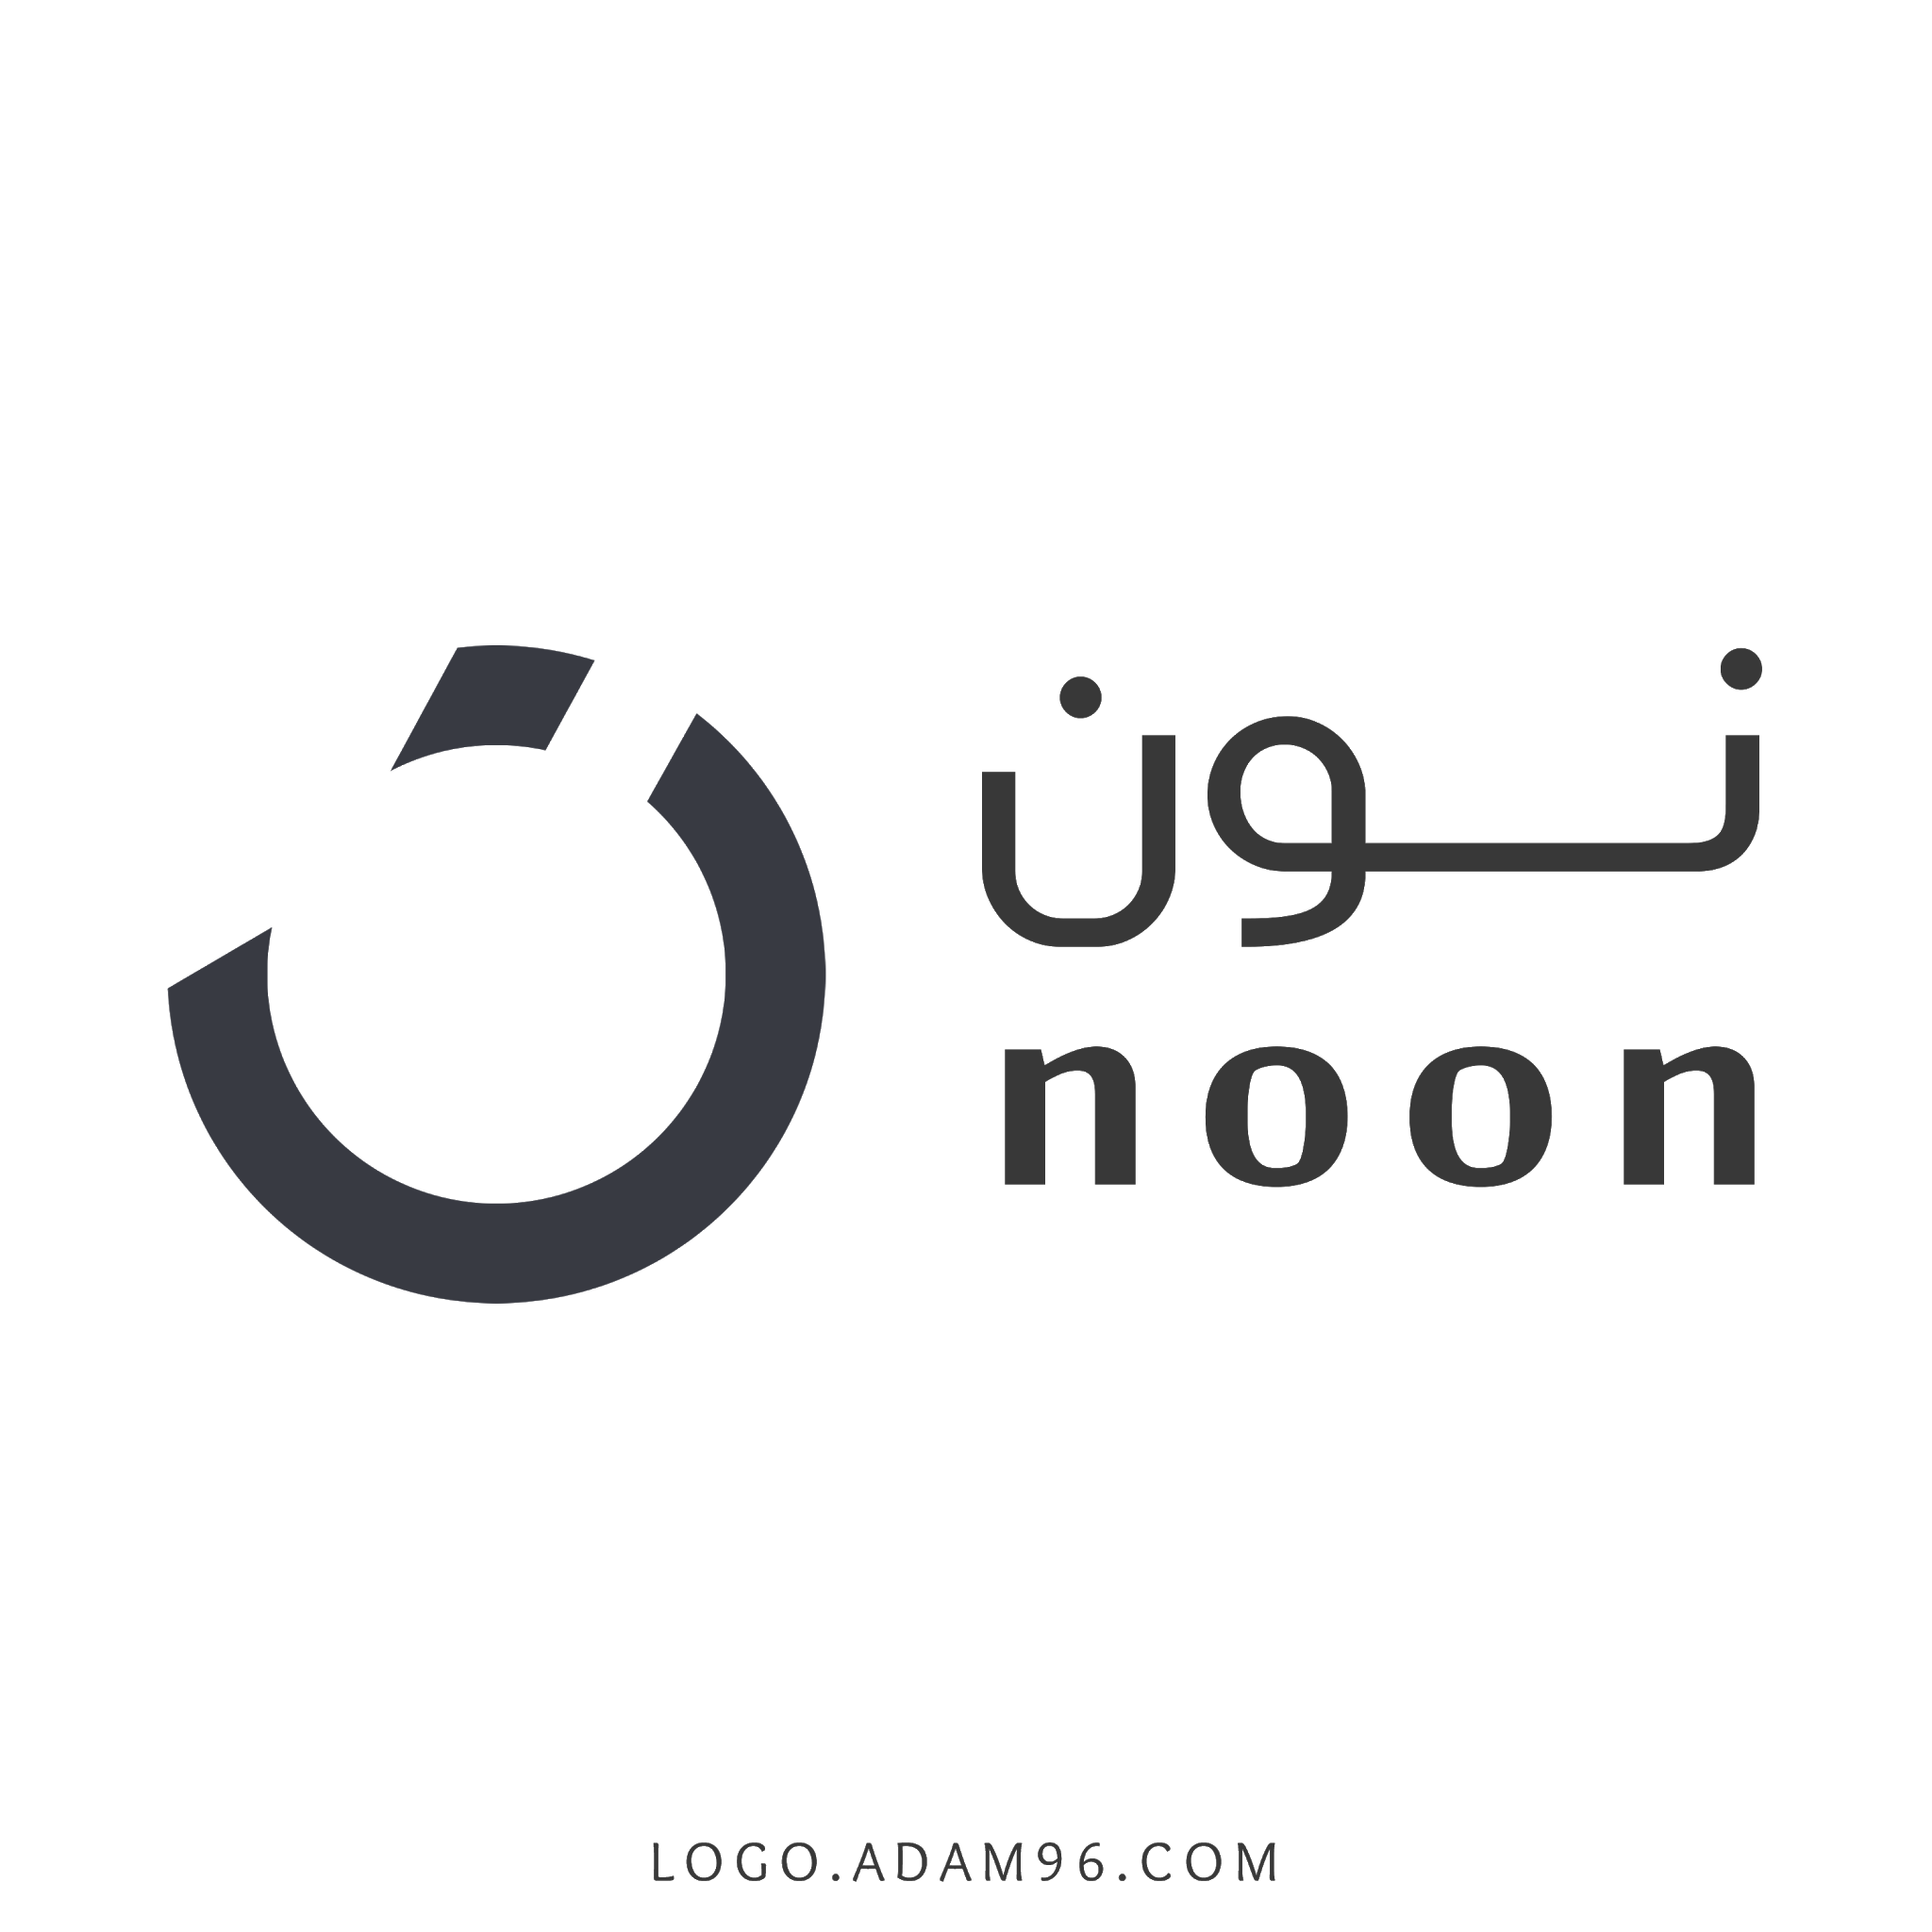 Noon time. Noon. Noon logo. Логотип студии полдень. Hackernoon лого.